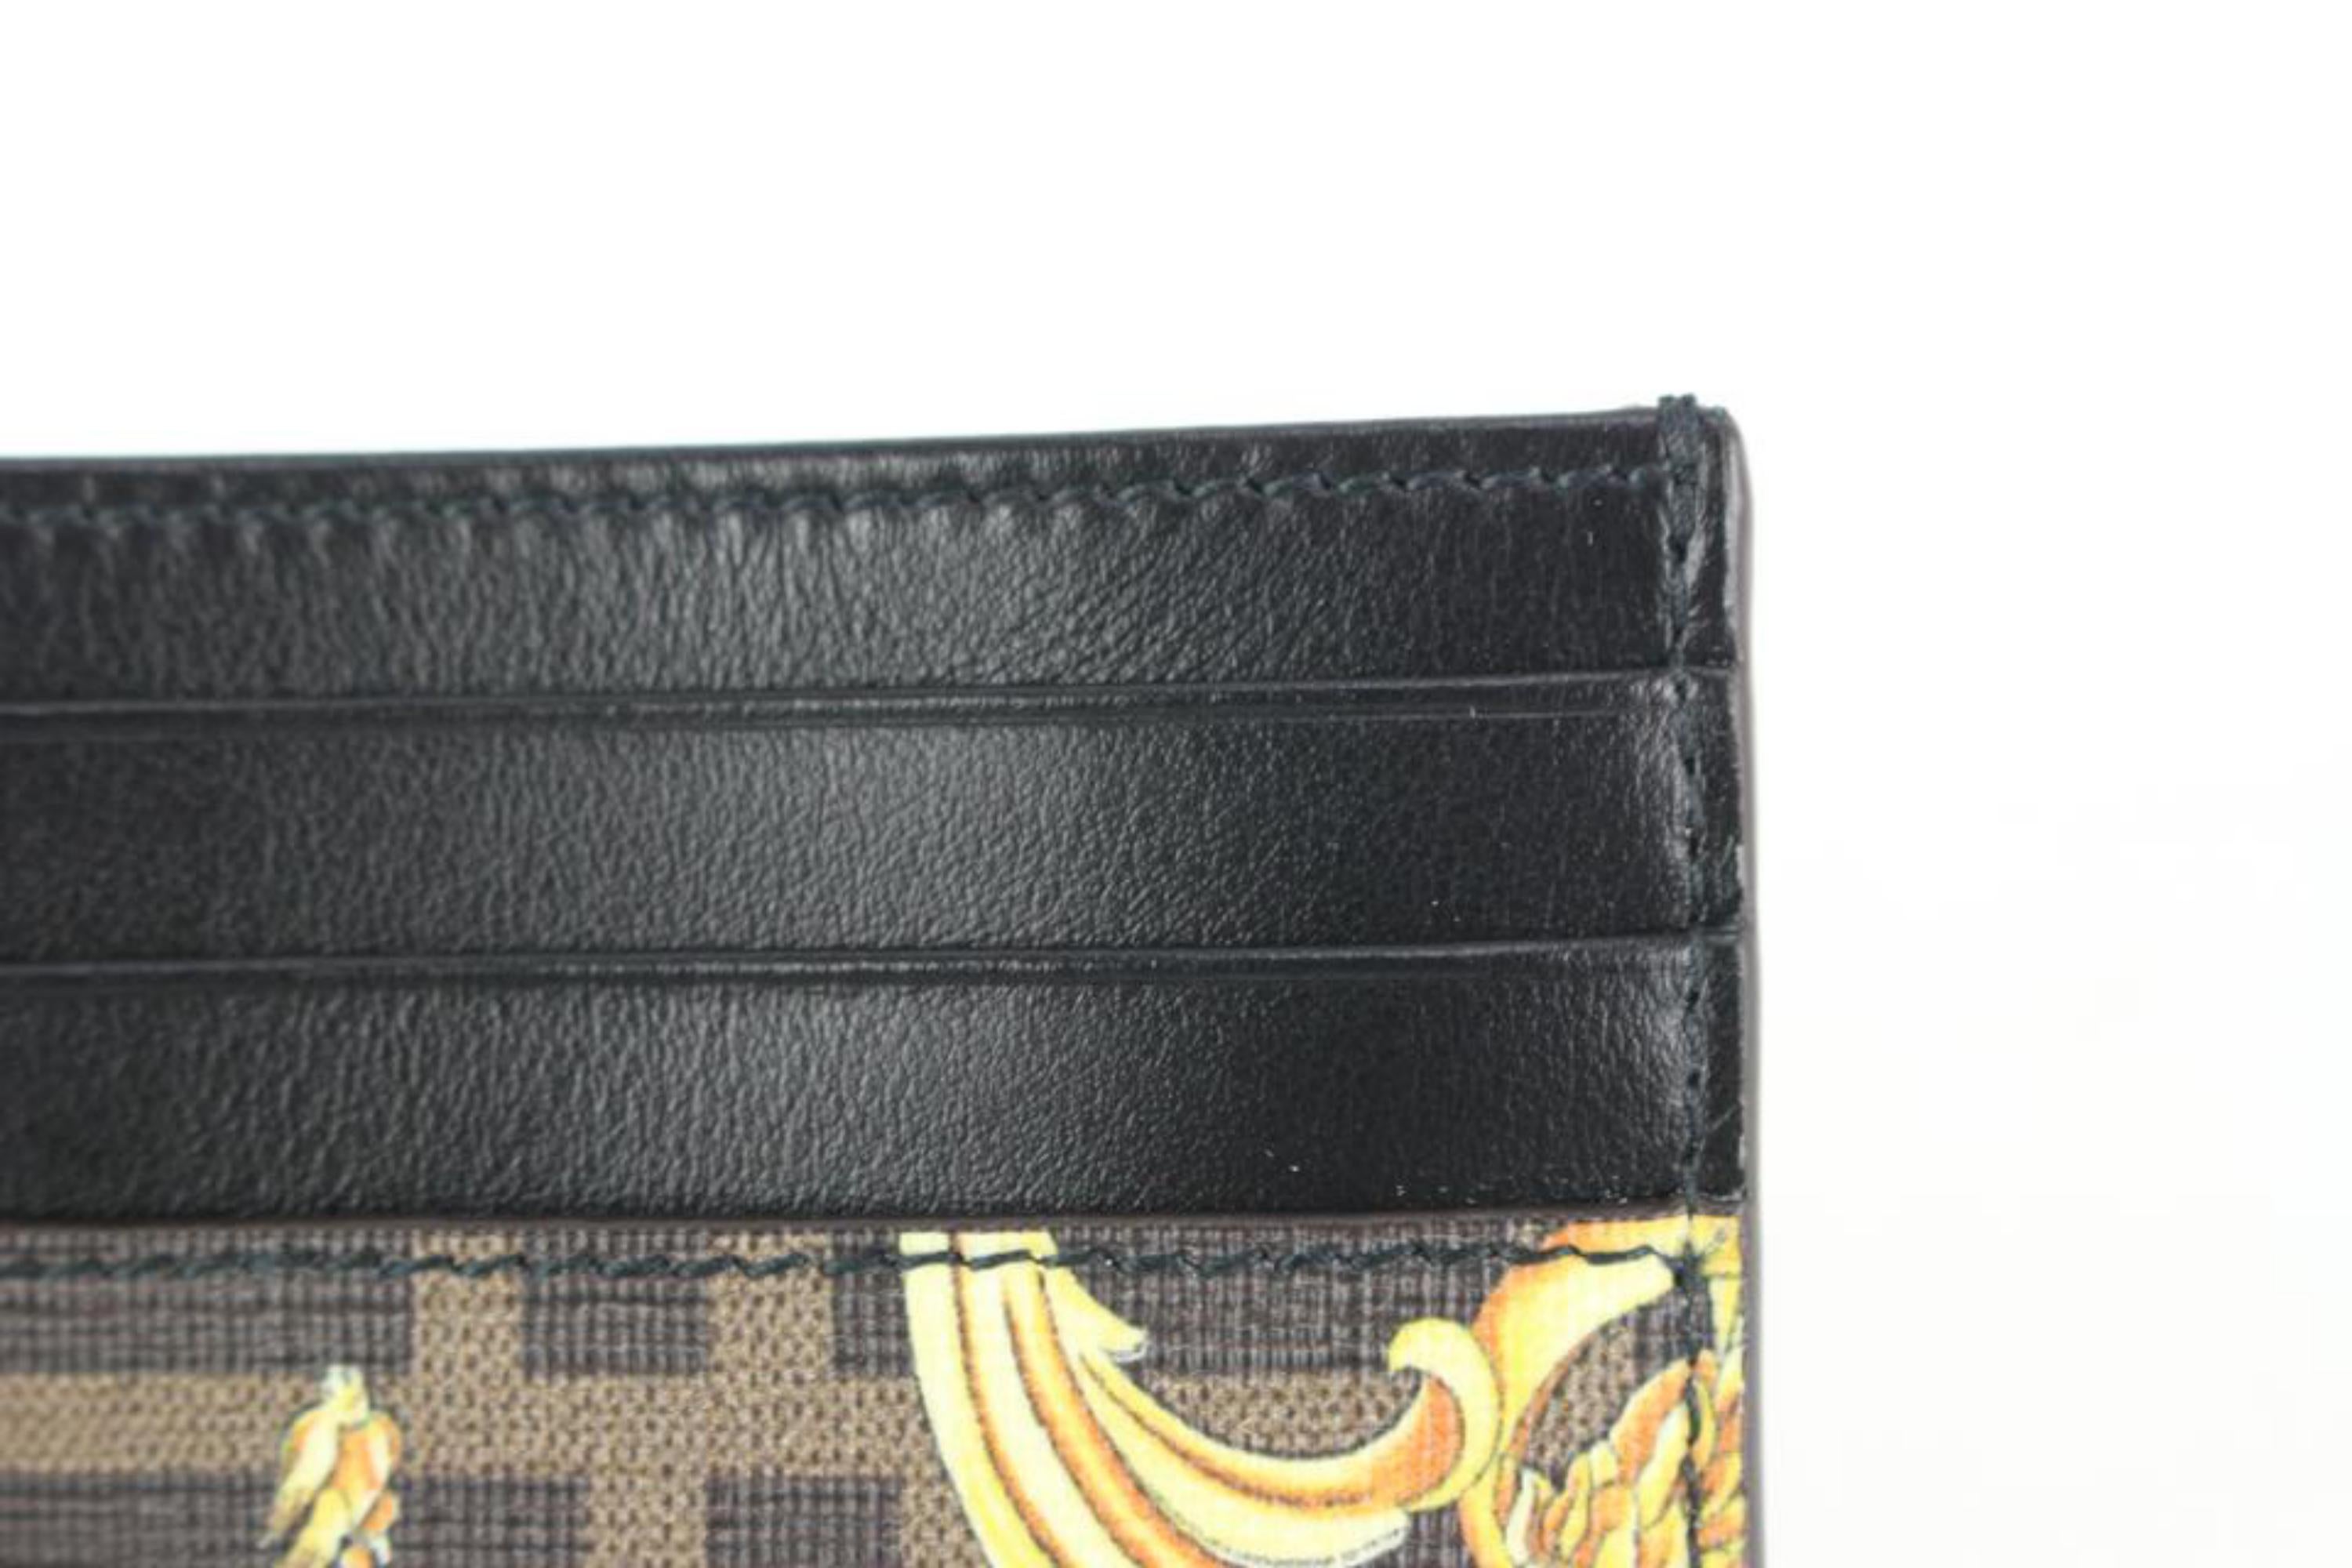 Gray Fendi x Versace Fendace Card Holder Wallet Case 91v516s For Sale